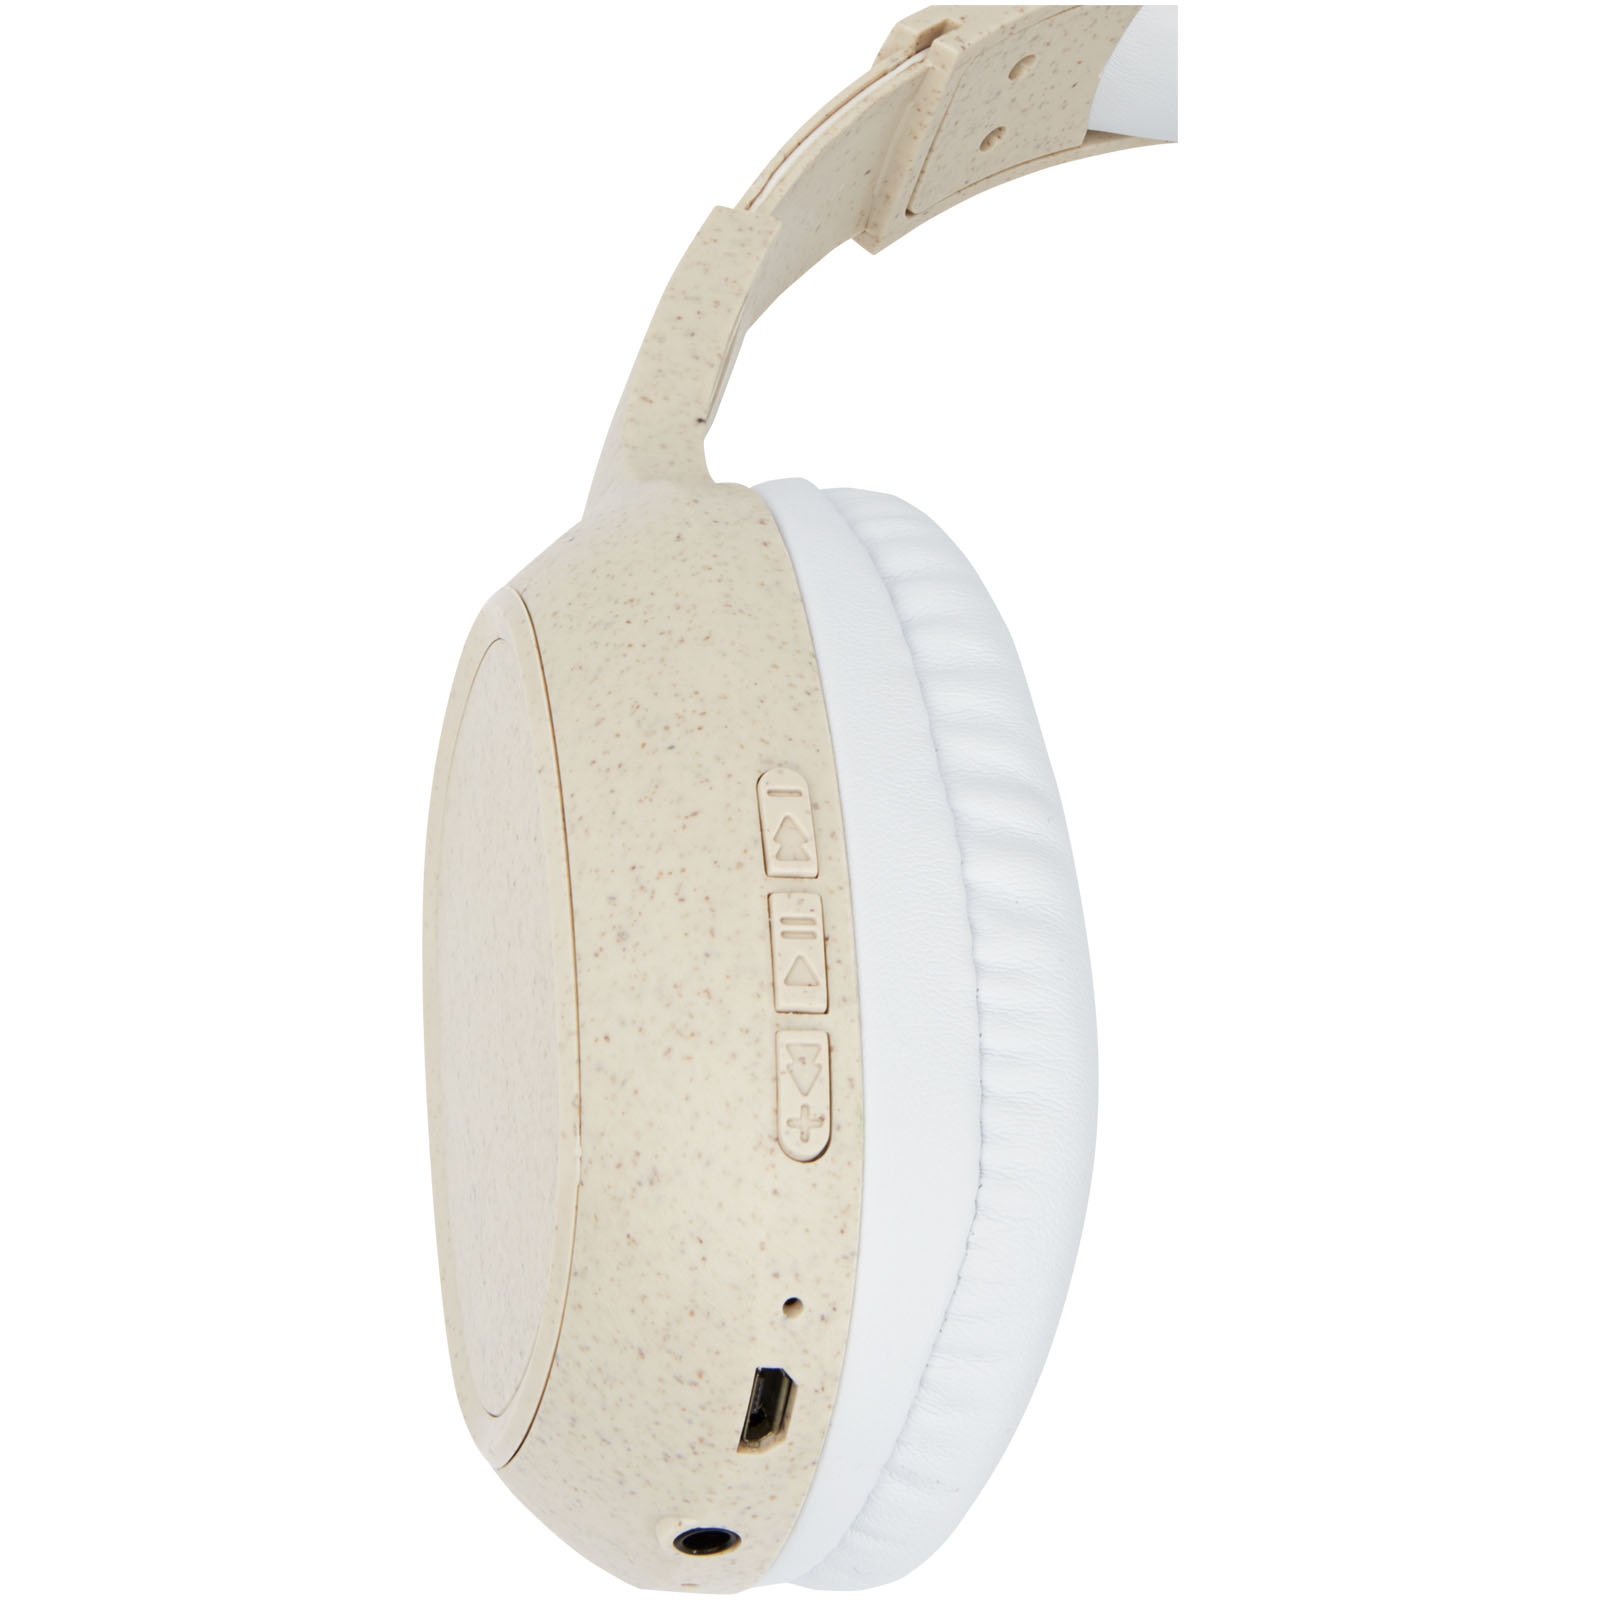 Advertising Headphones - Riff wheat straw Bluetooth® headphones with microphone - 4